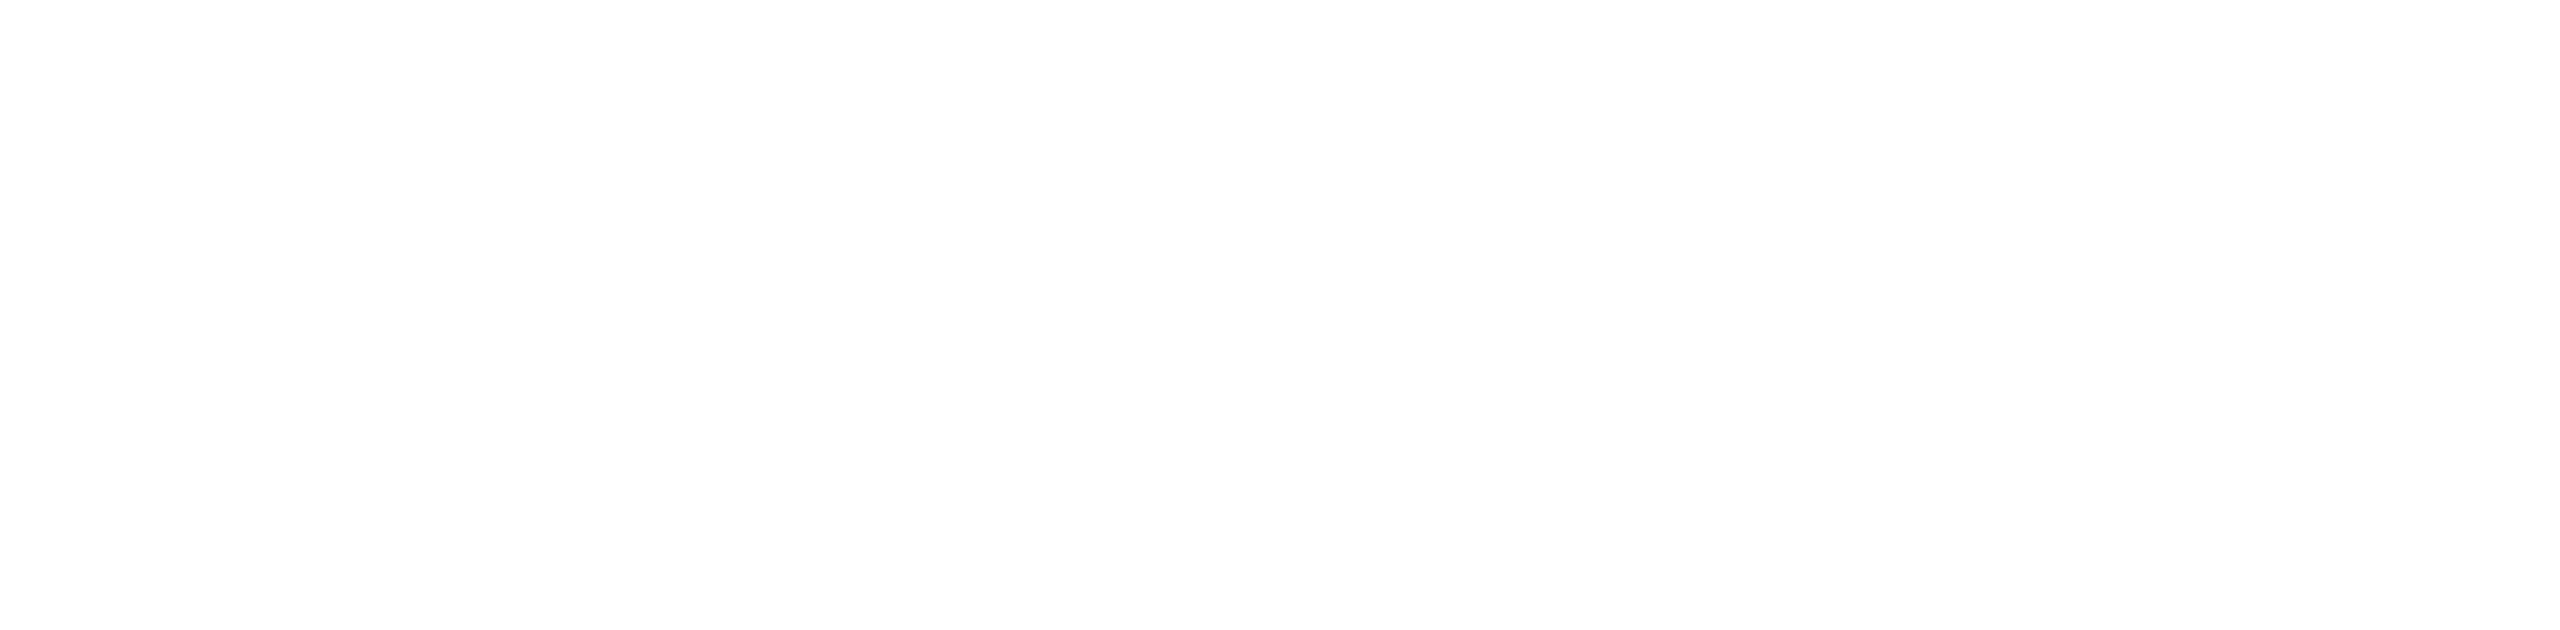 City-of-Oakland-logo-white